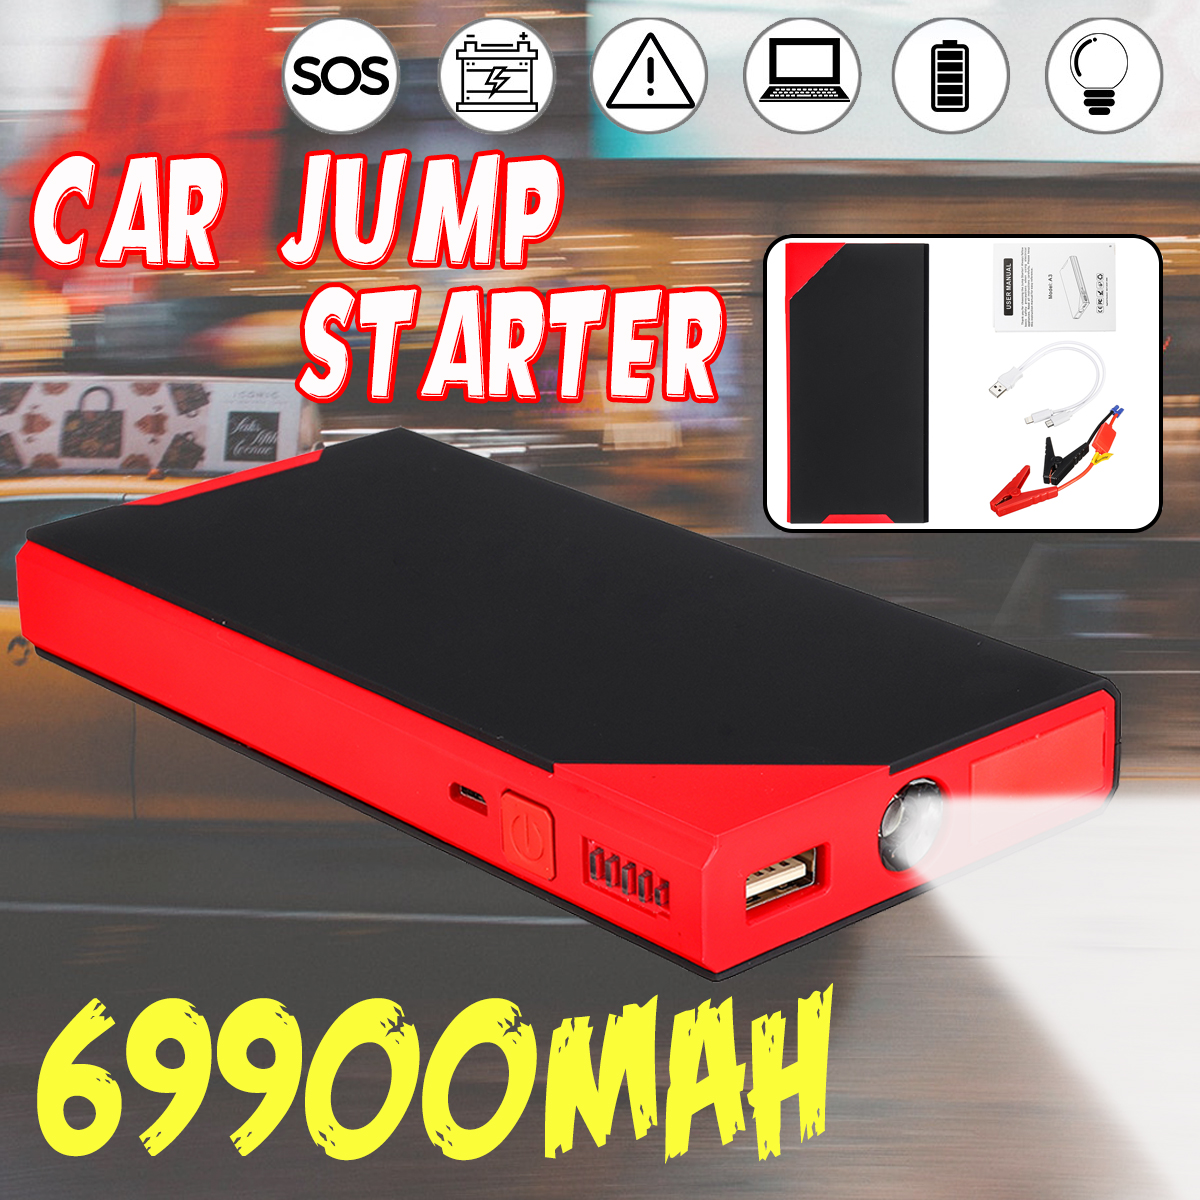 69900-mAh-Emergency-Jump-Starter-Booster-Multi-functional-CarPower-Bank-Auto-Power-Source-1489154-1